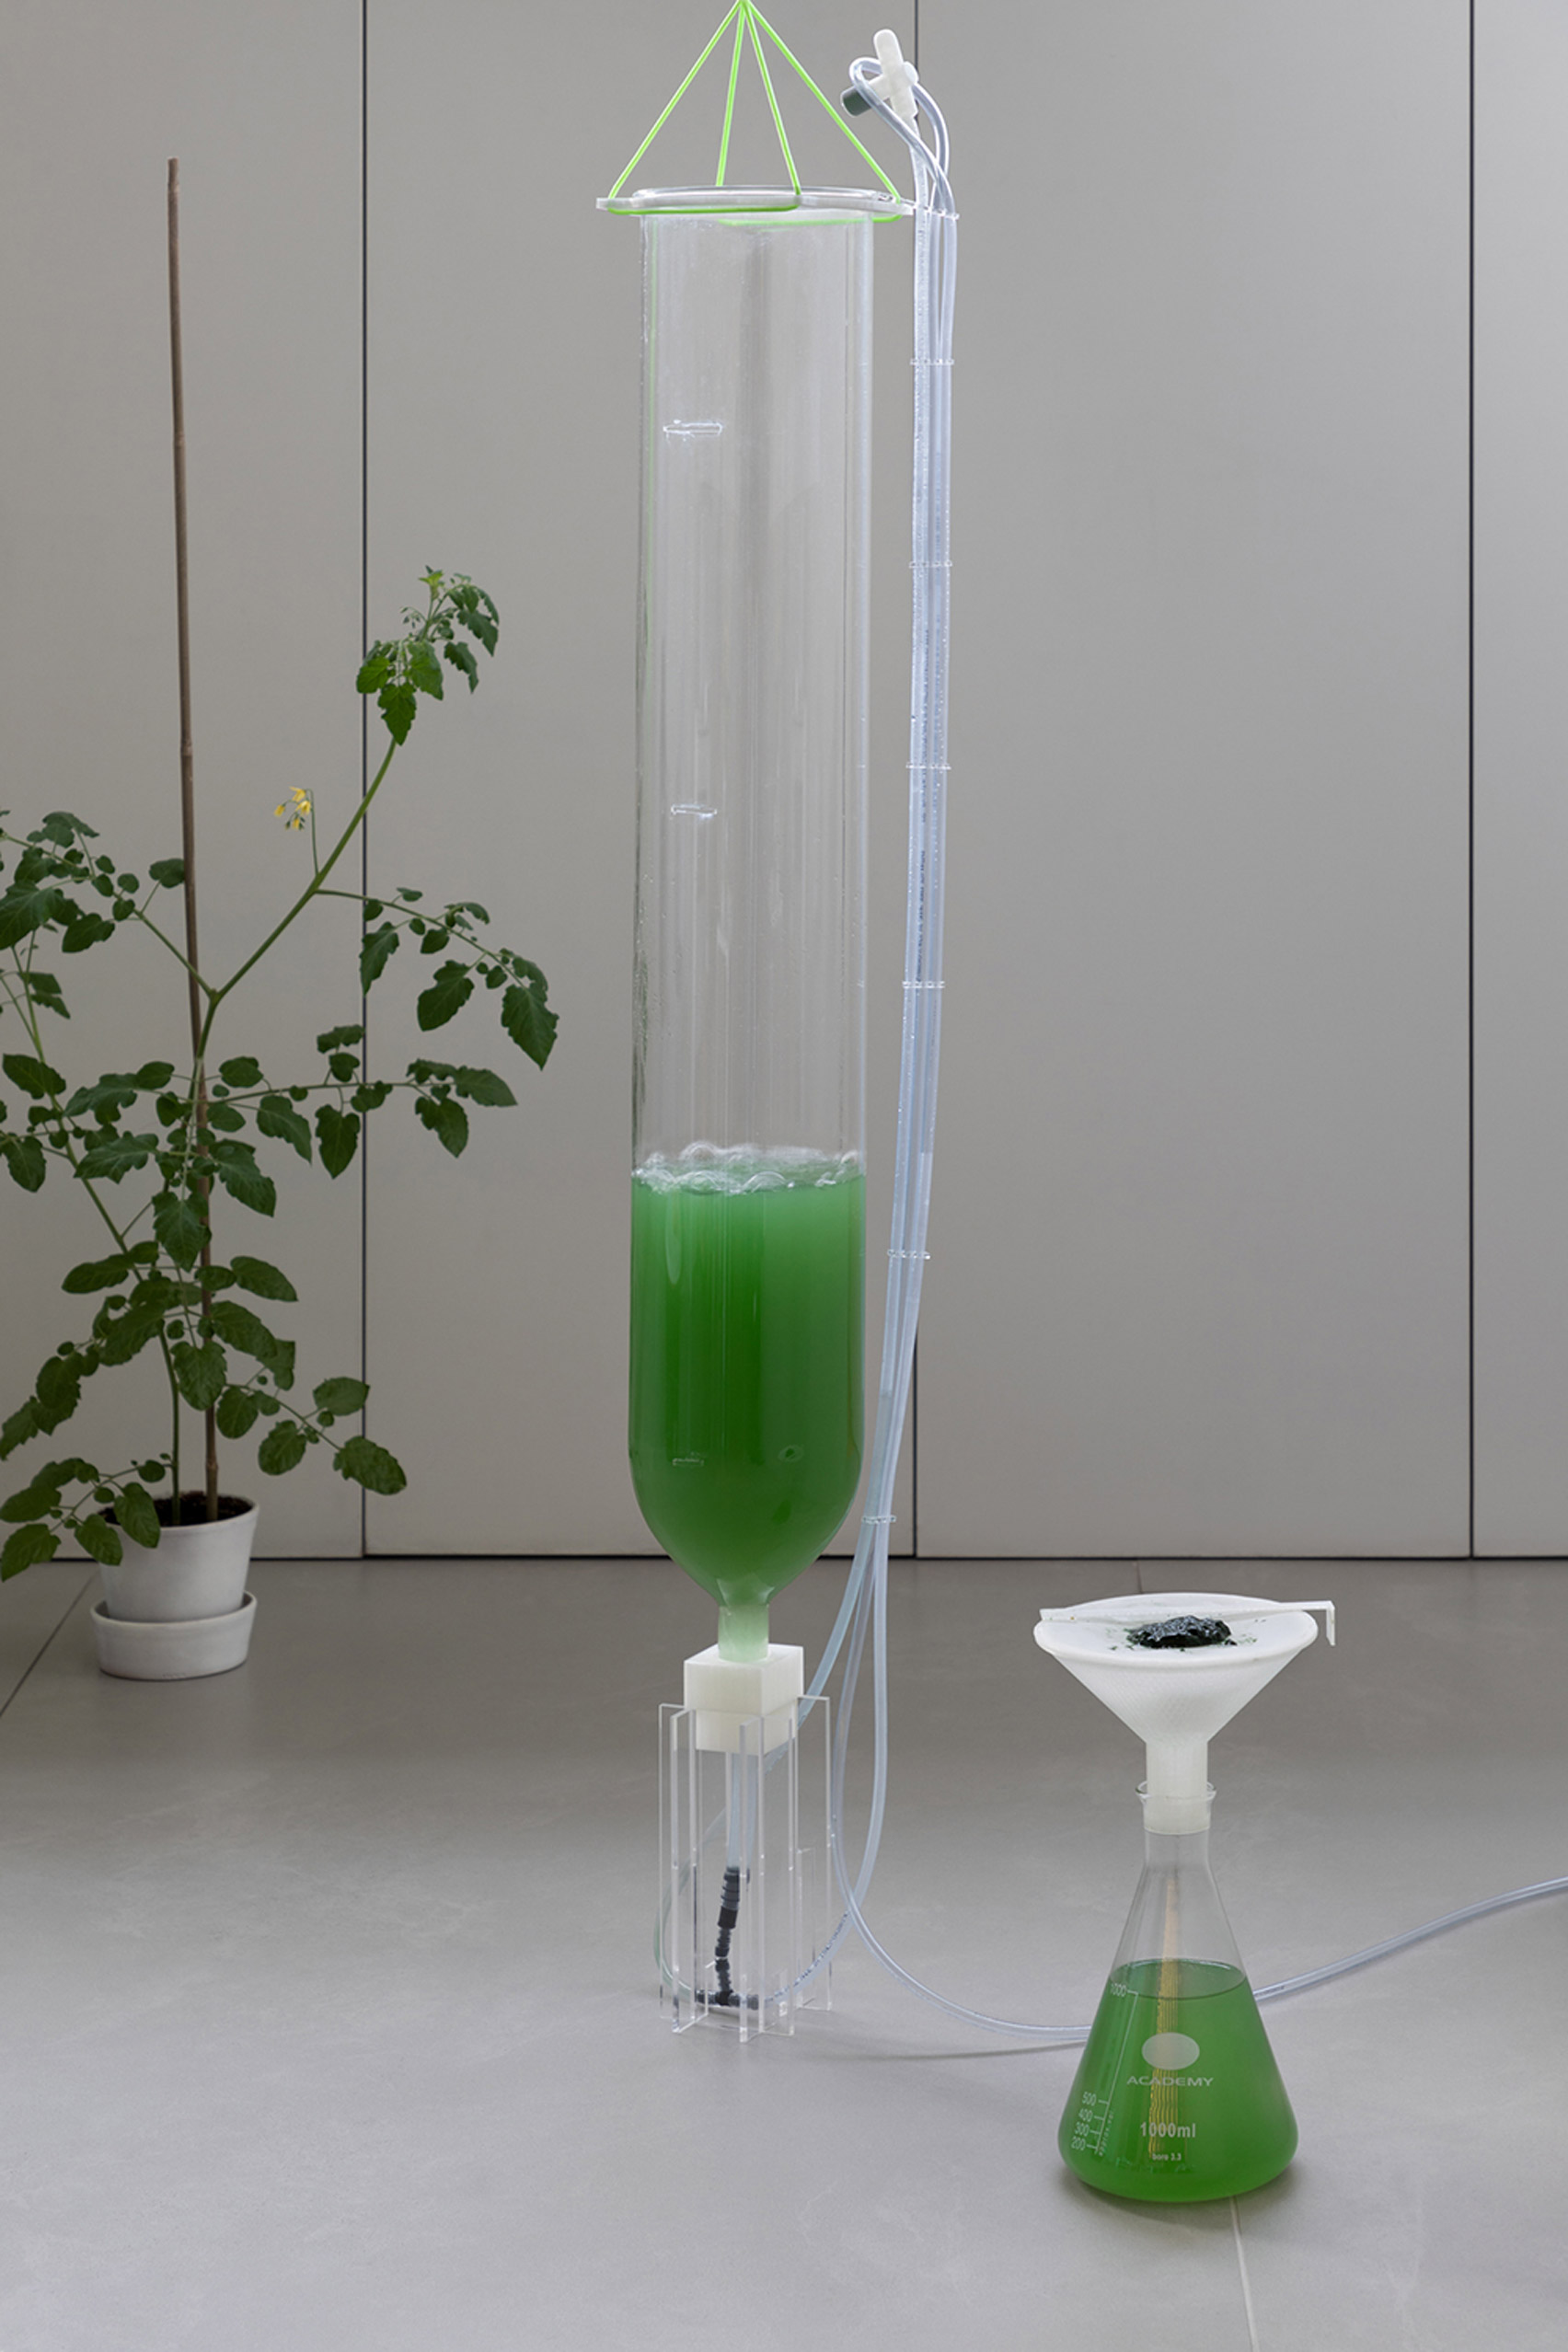 algae bioreactor kit